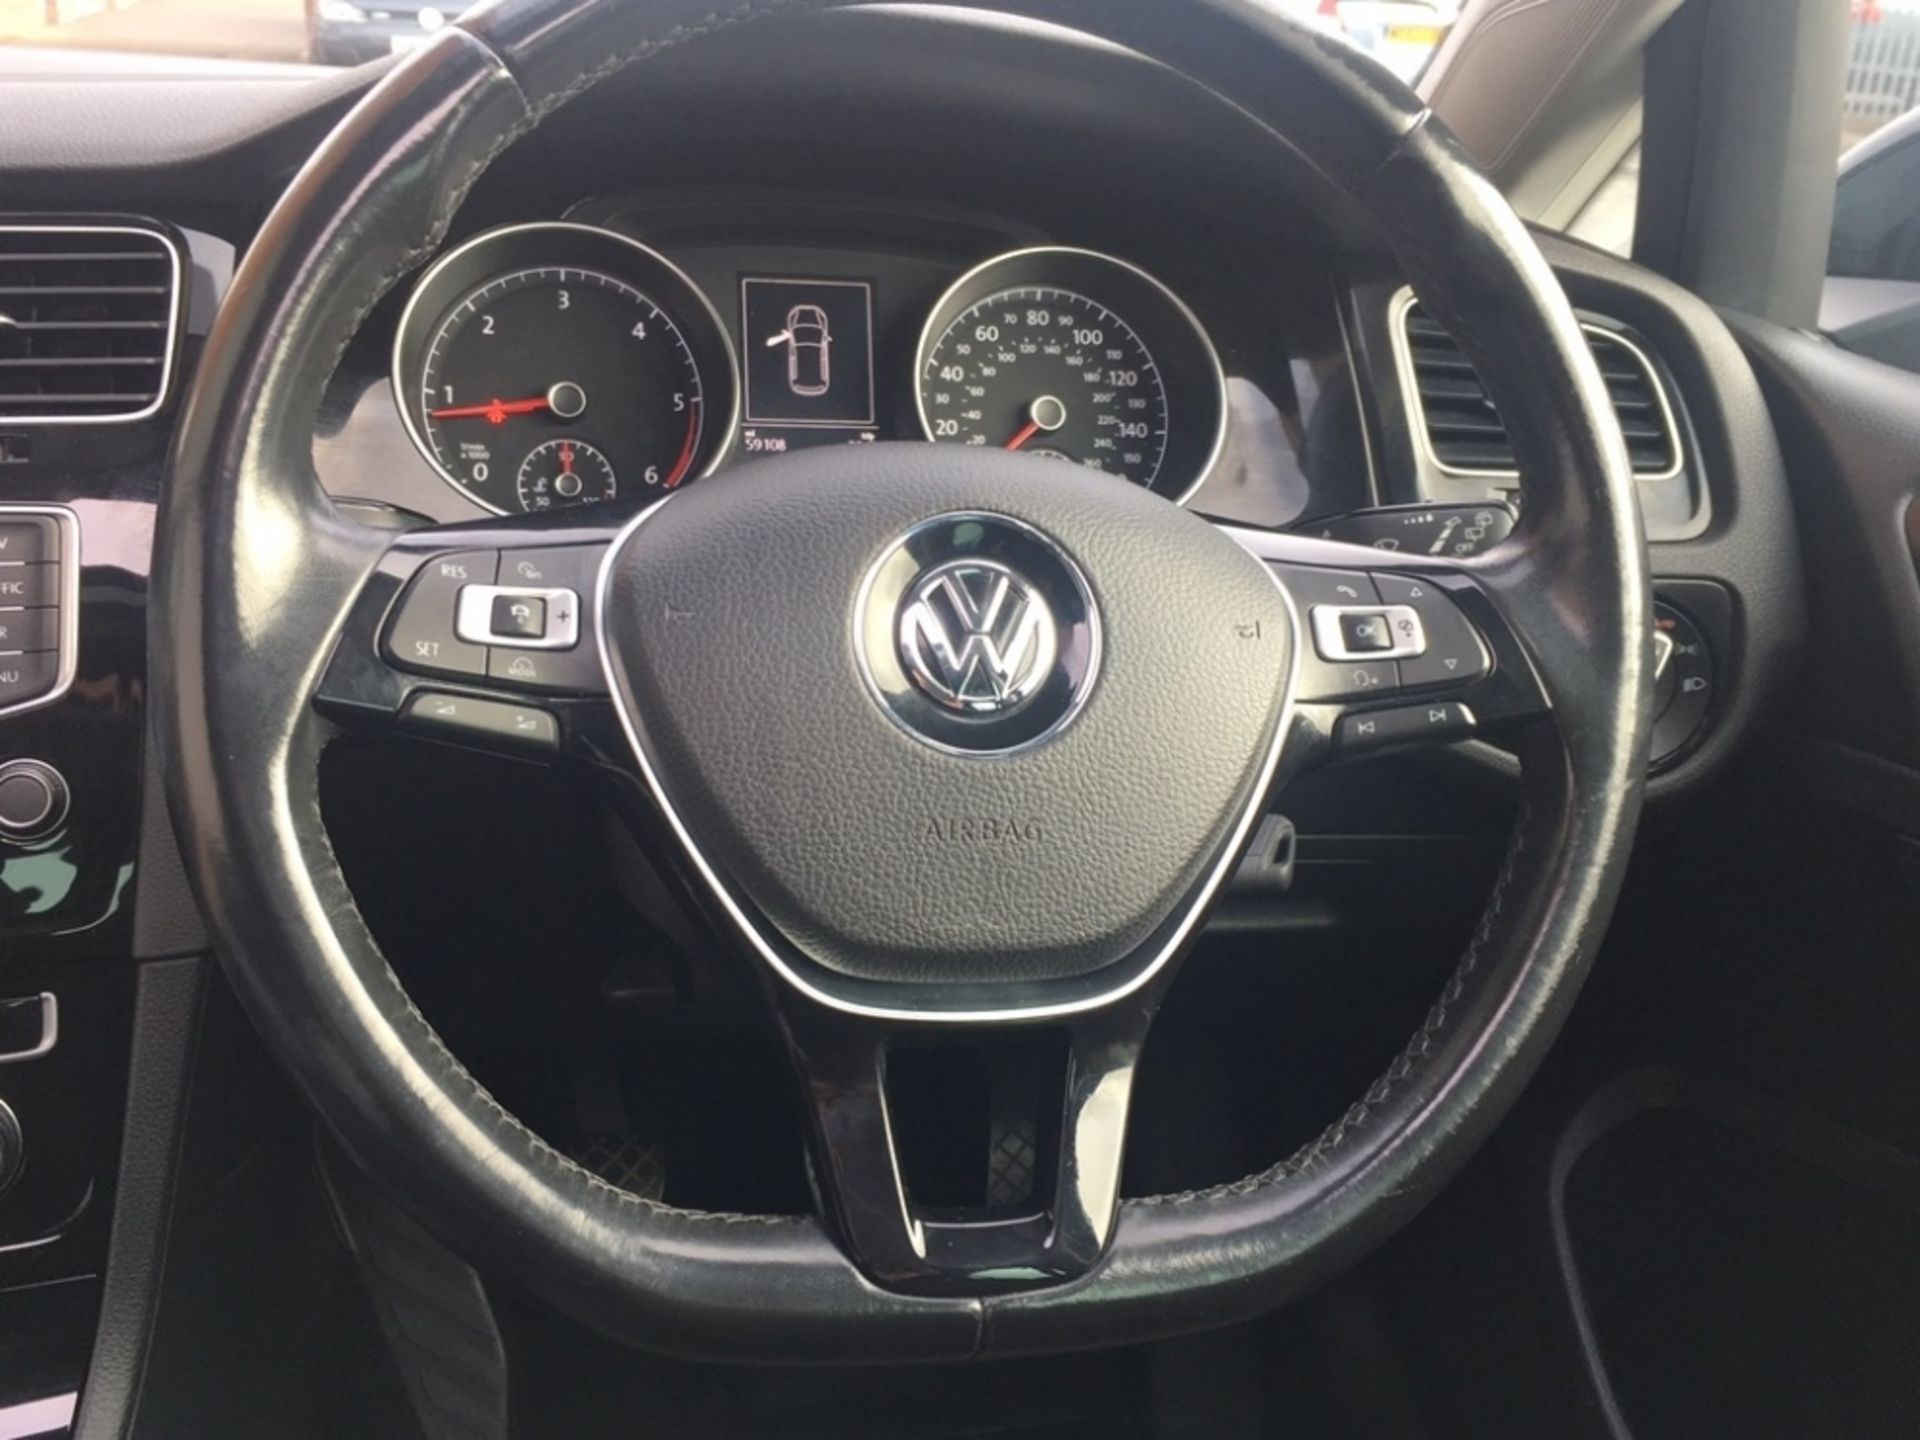 Volkswagen Golf 2.0 TDI BlueMotion Tech GT 5Dr – Diesel- Black Reg: MF66 XMH - 2016 Mileage: 60, - Image 6 of 11